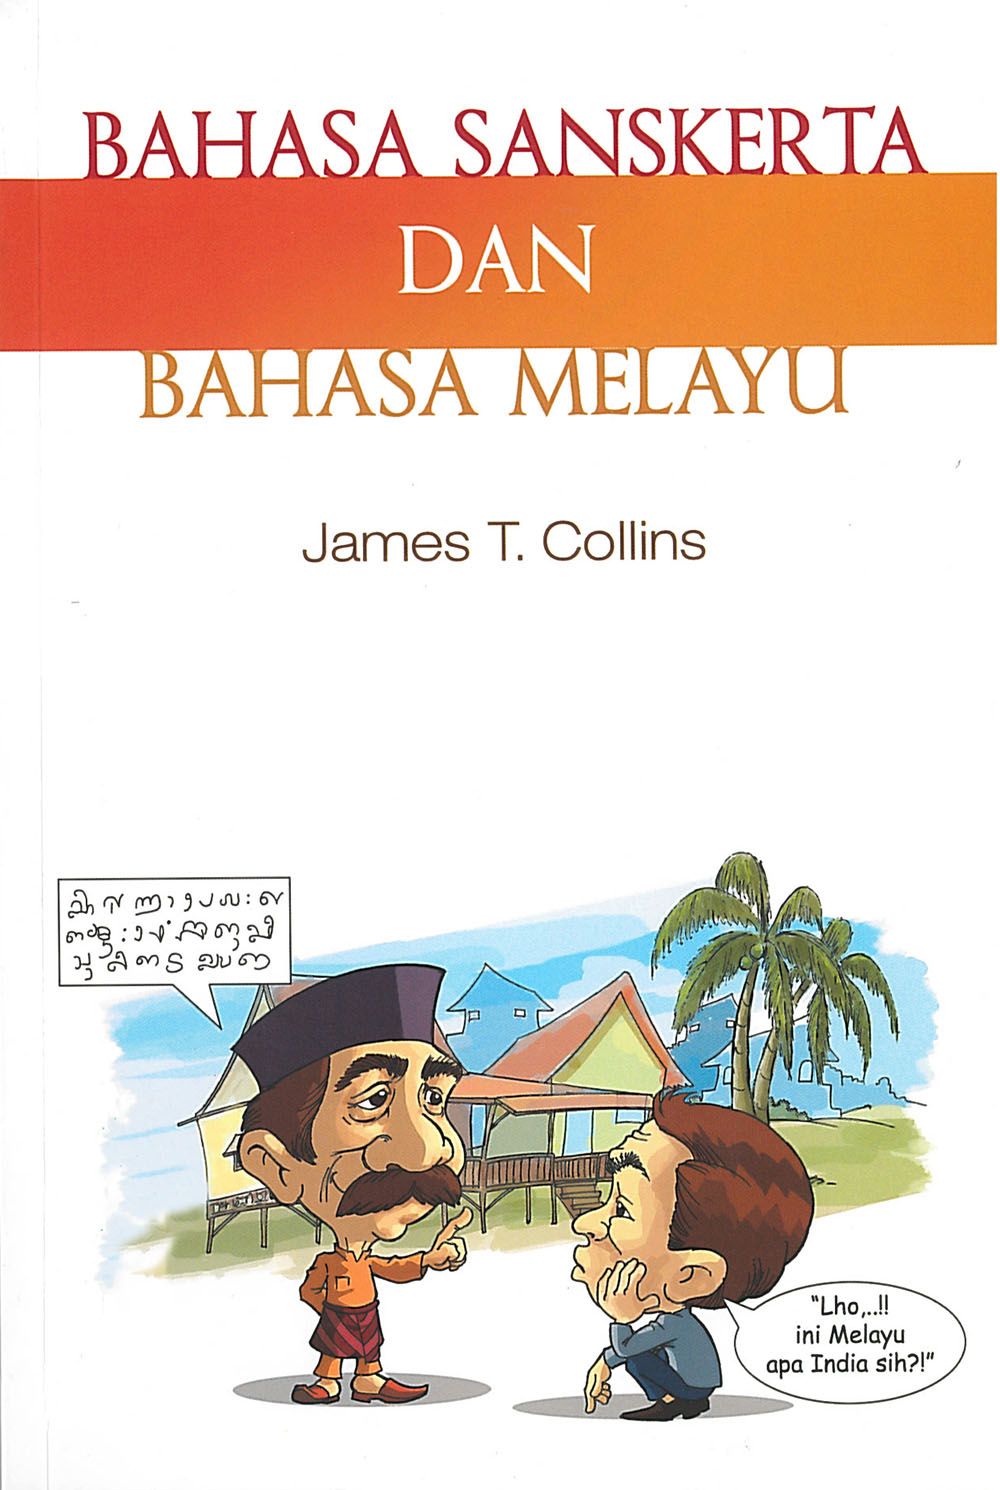 Bahasa Sanskerta dan Bahasa Melayu